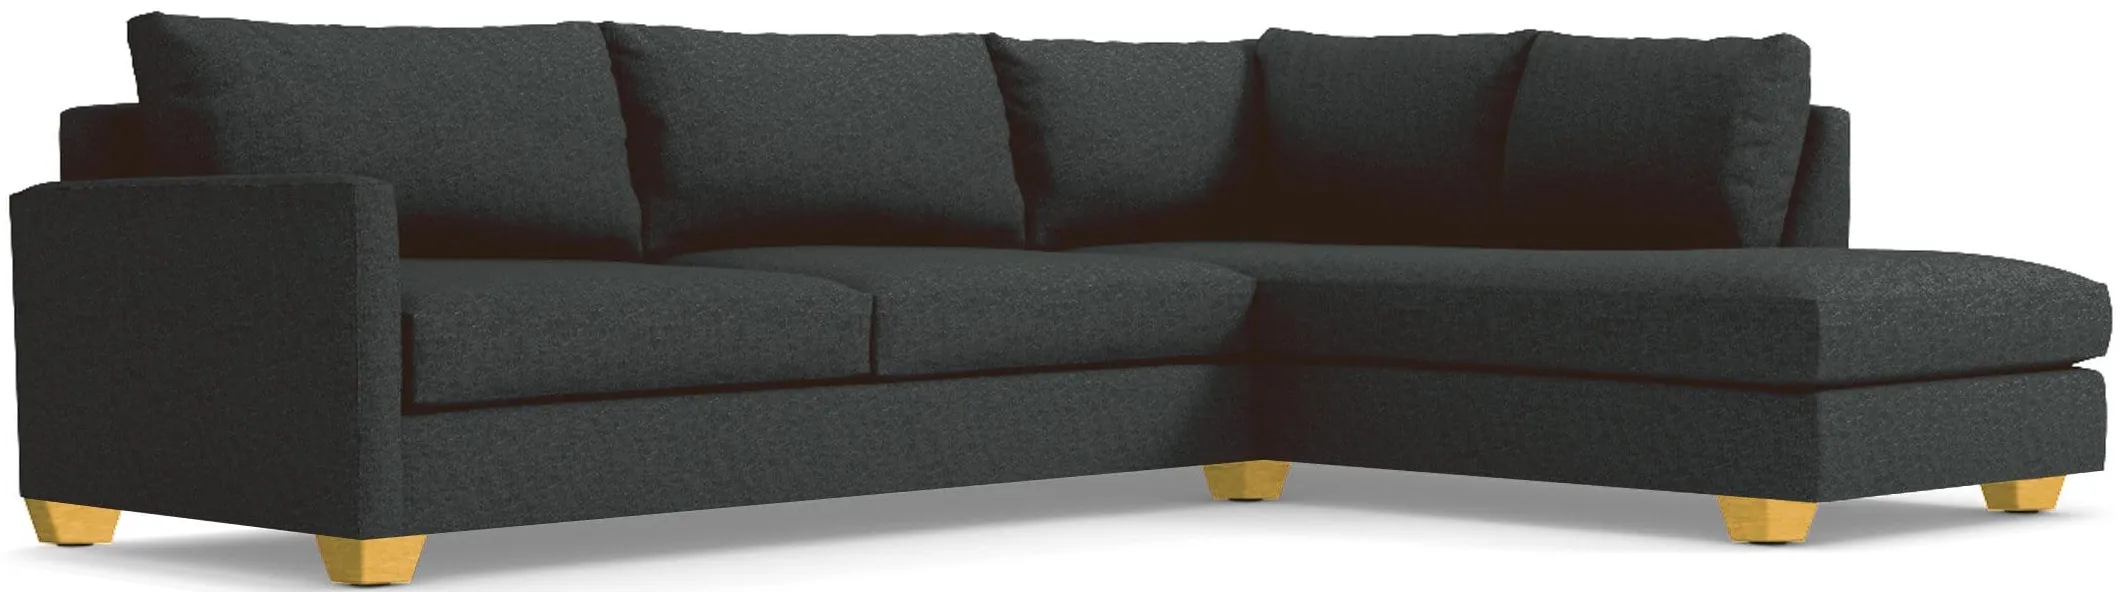 Tuxedo 2pc Sectional Sofa